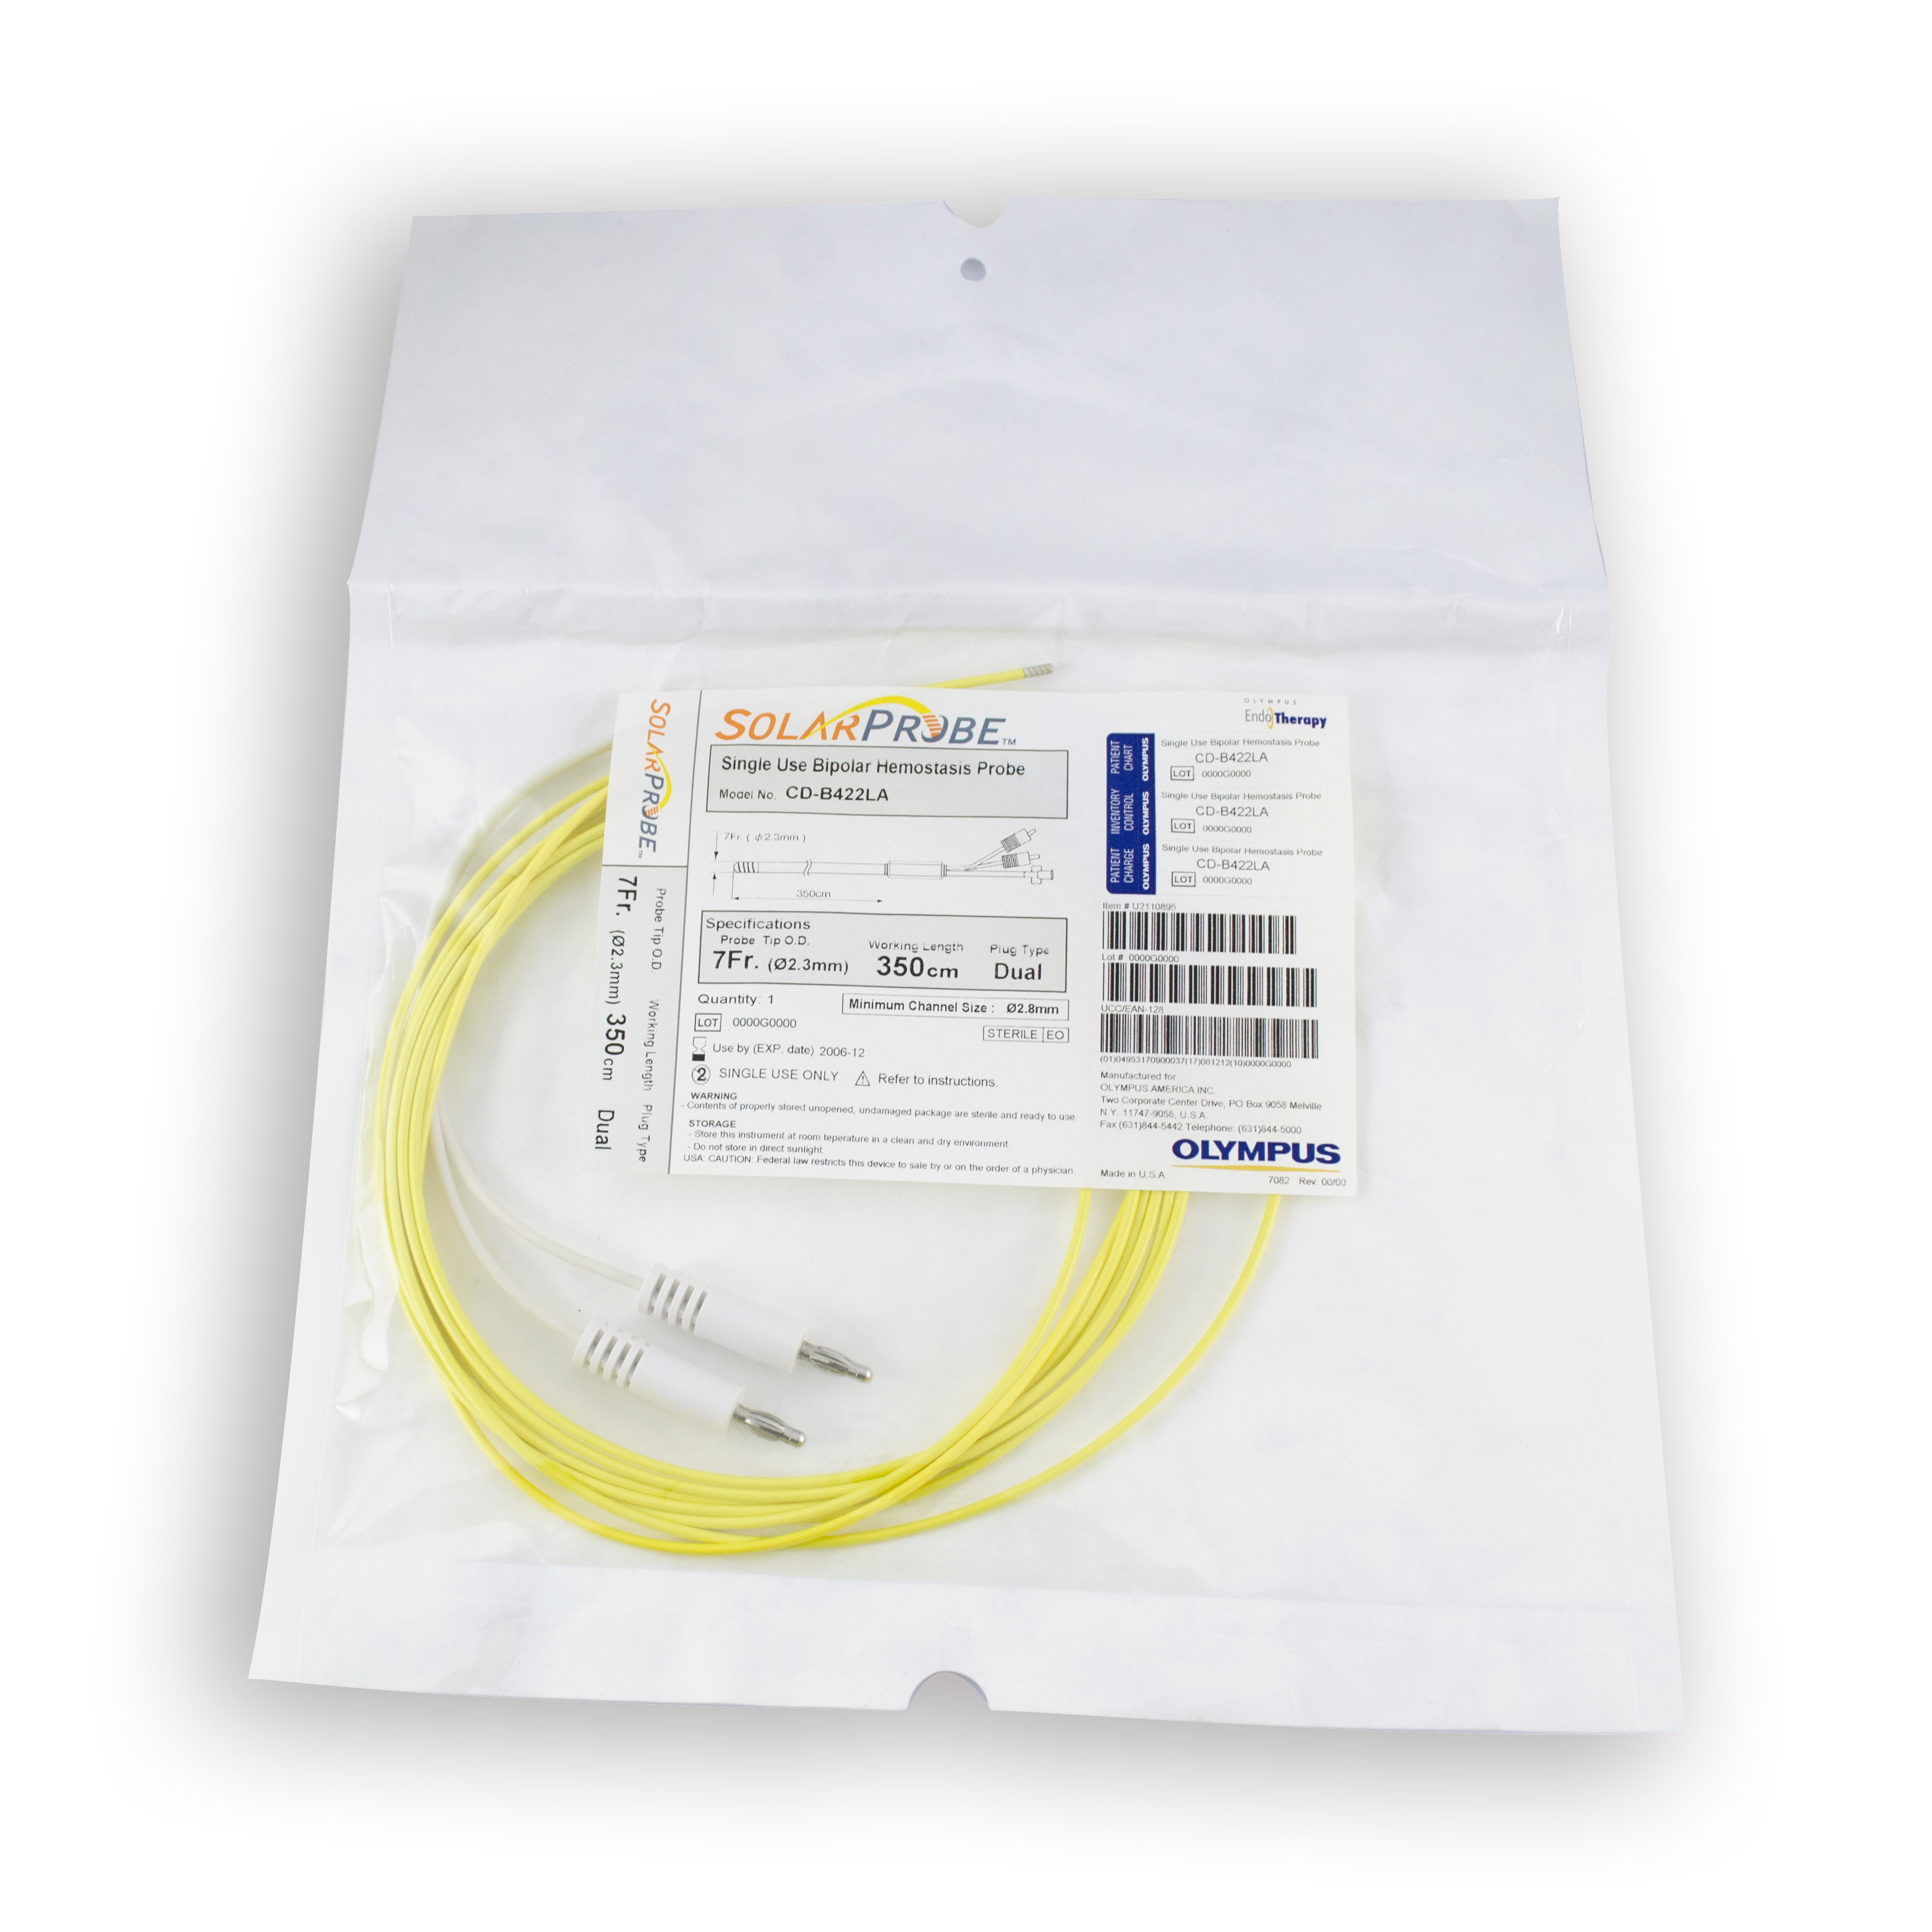 [In-Date] Olympus Disposable Coagulation Electrode (Heat Probe) - CD-B422LA